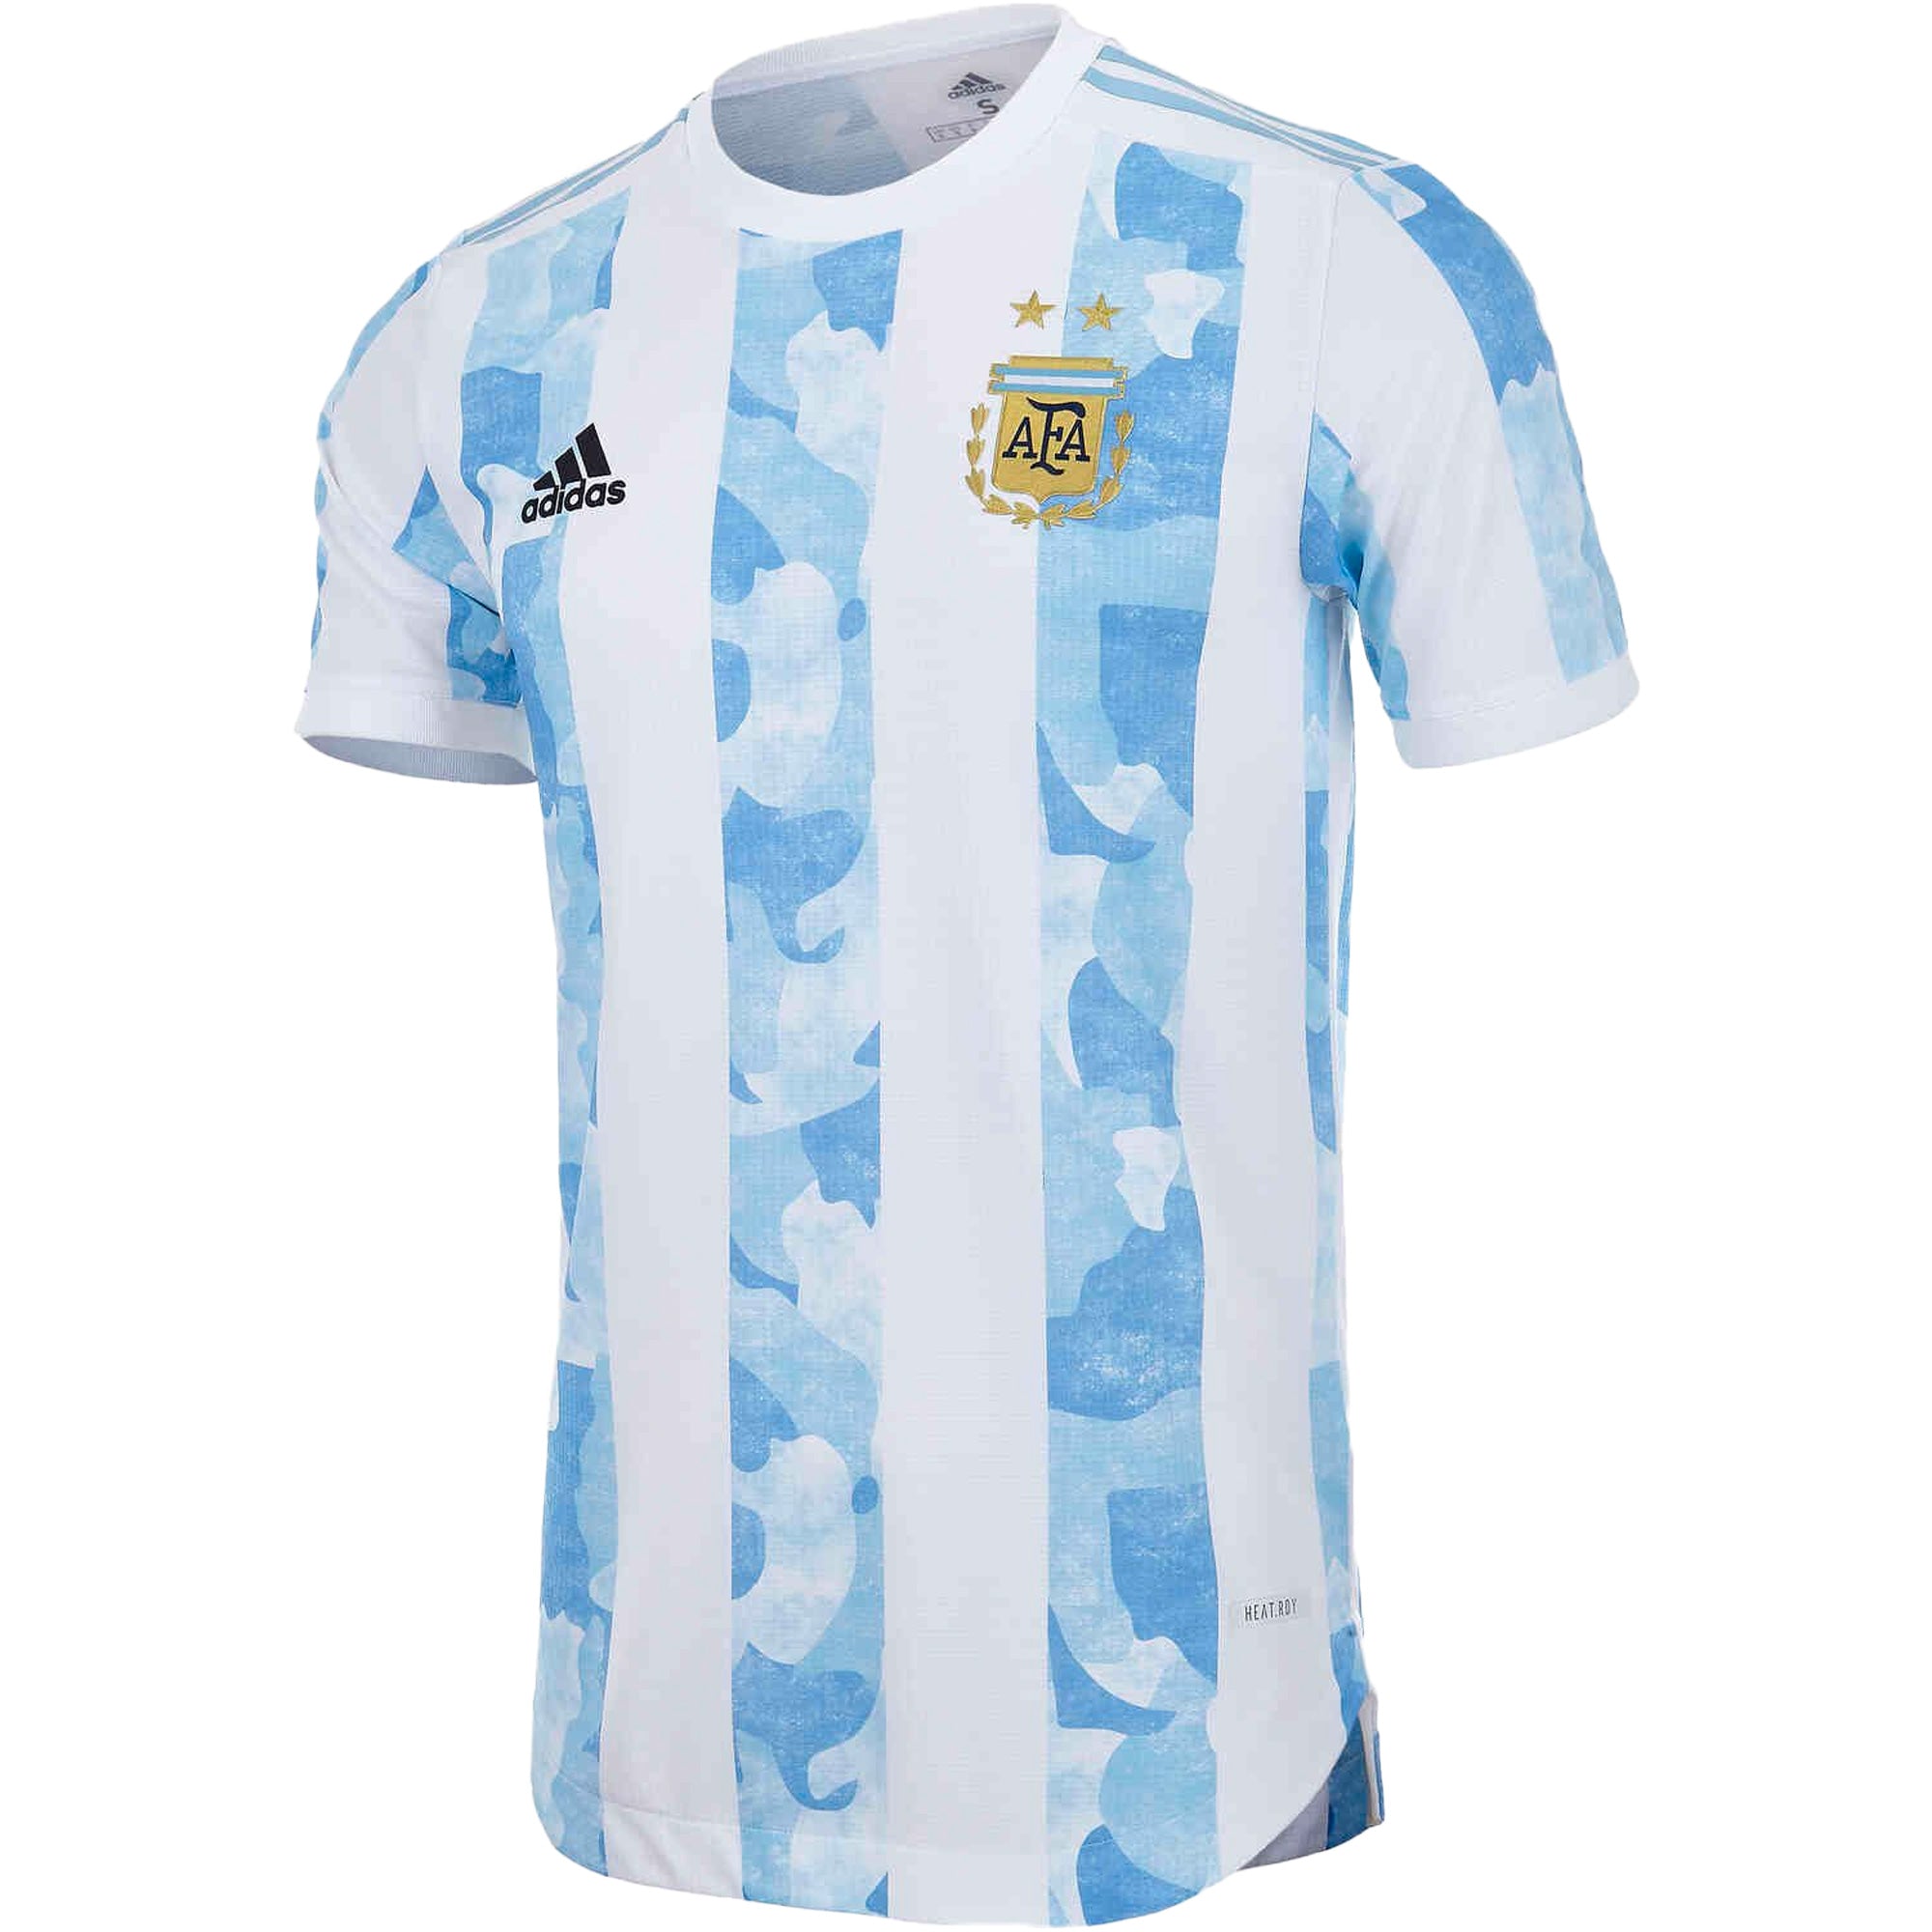 argentina jersey adidas